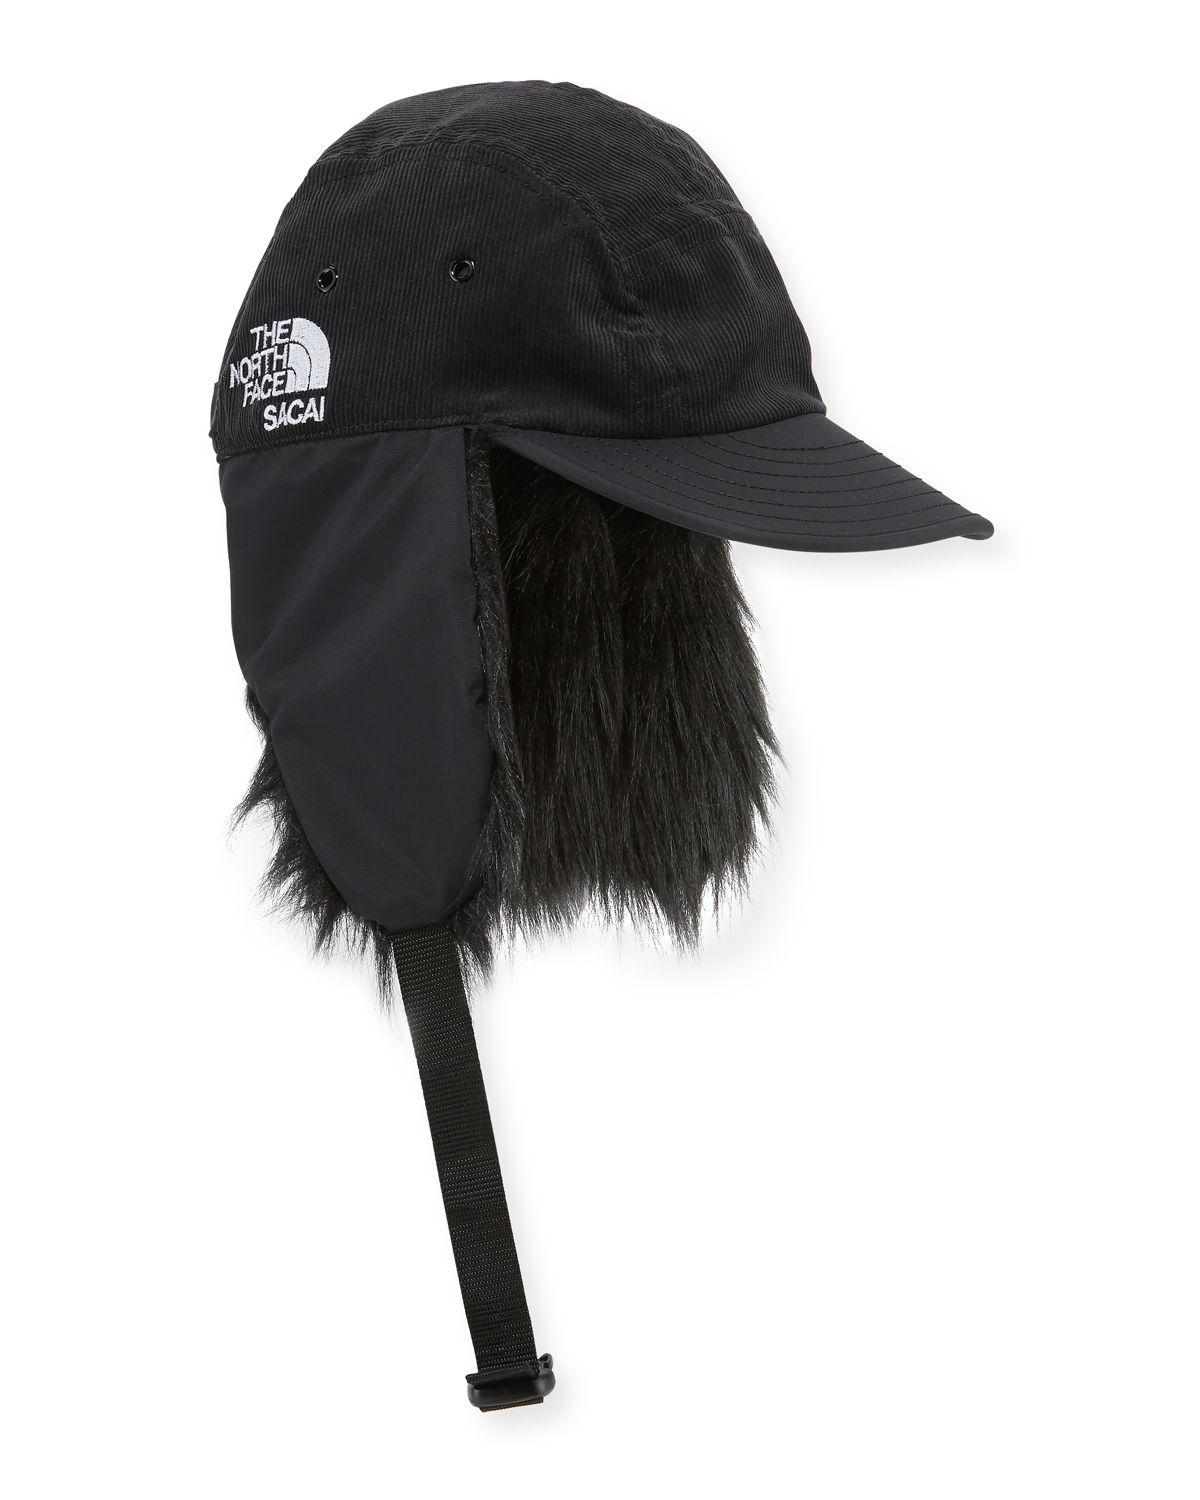 north face trapper hat Cheaper Than 